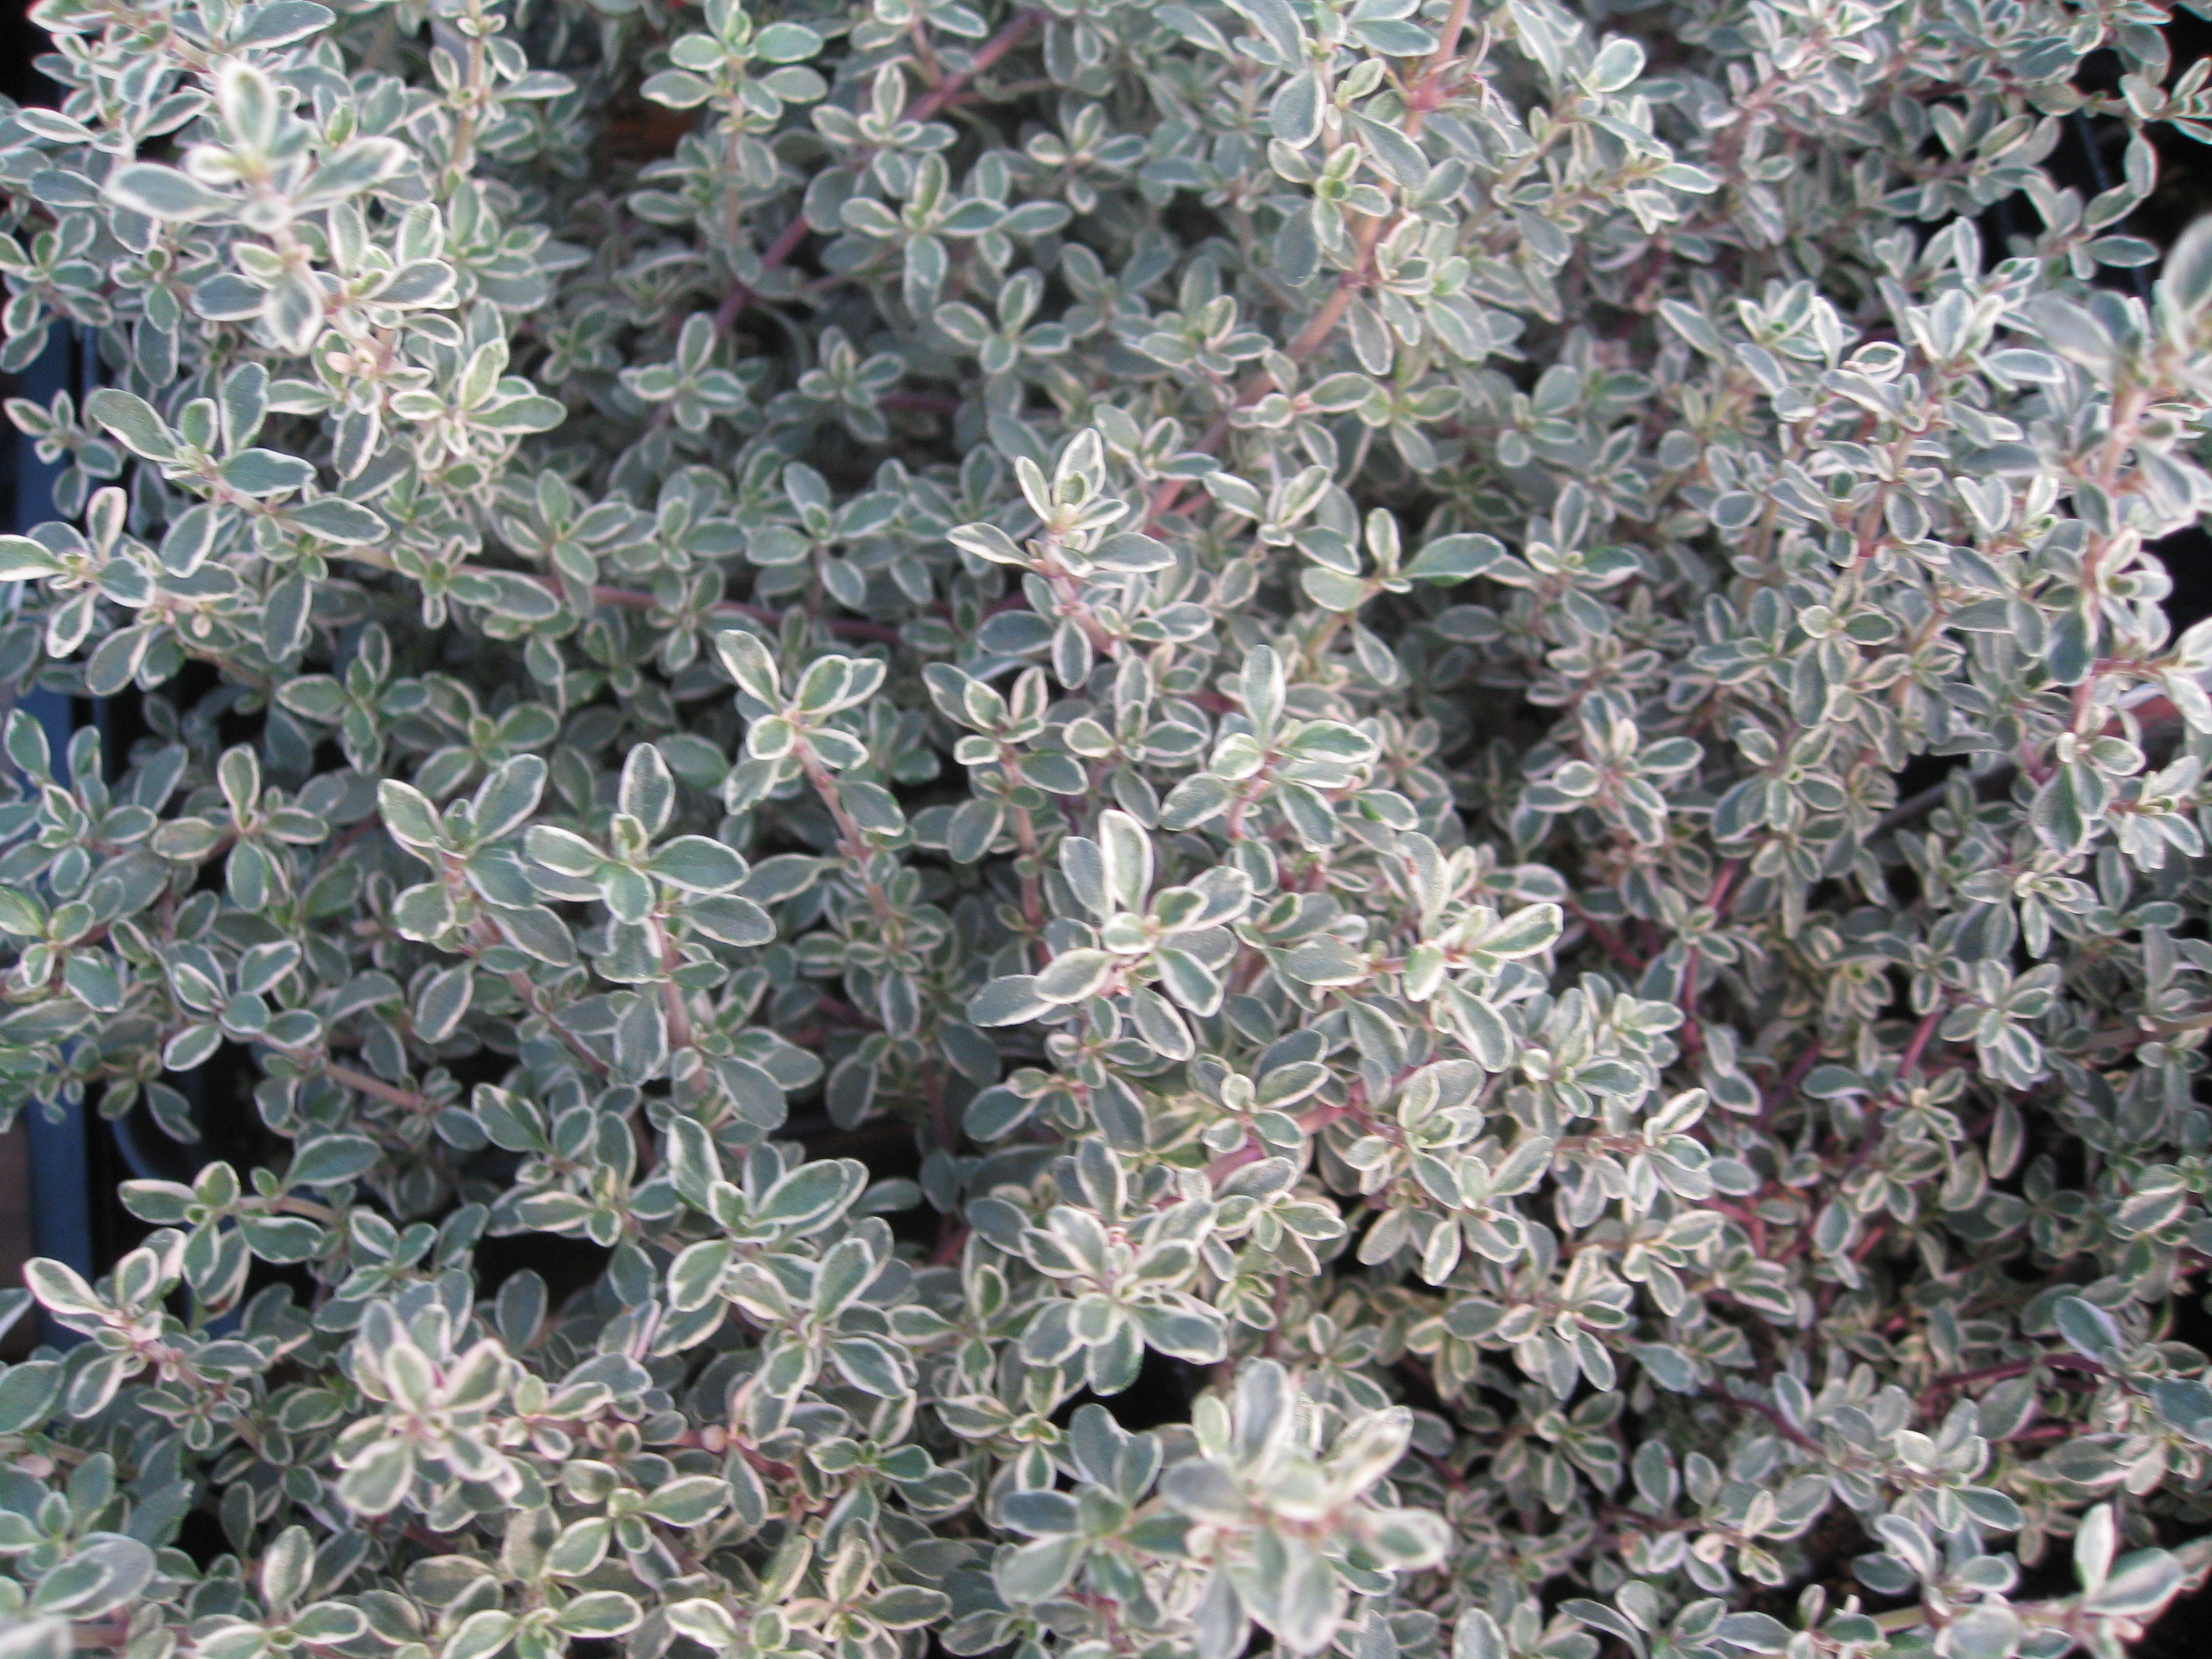 Thymus vulgaris  'Argenteus' / Silver Thyme